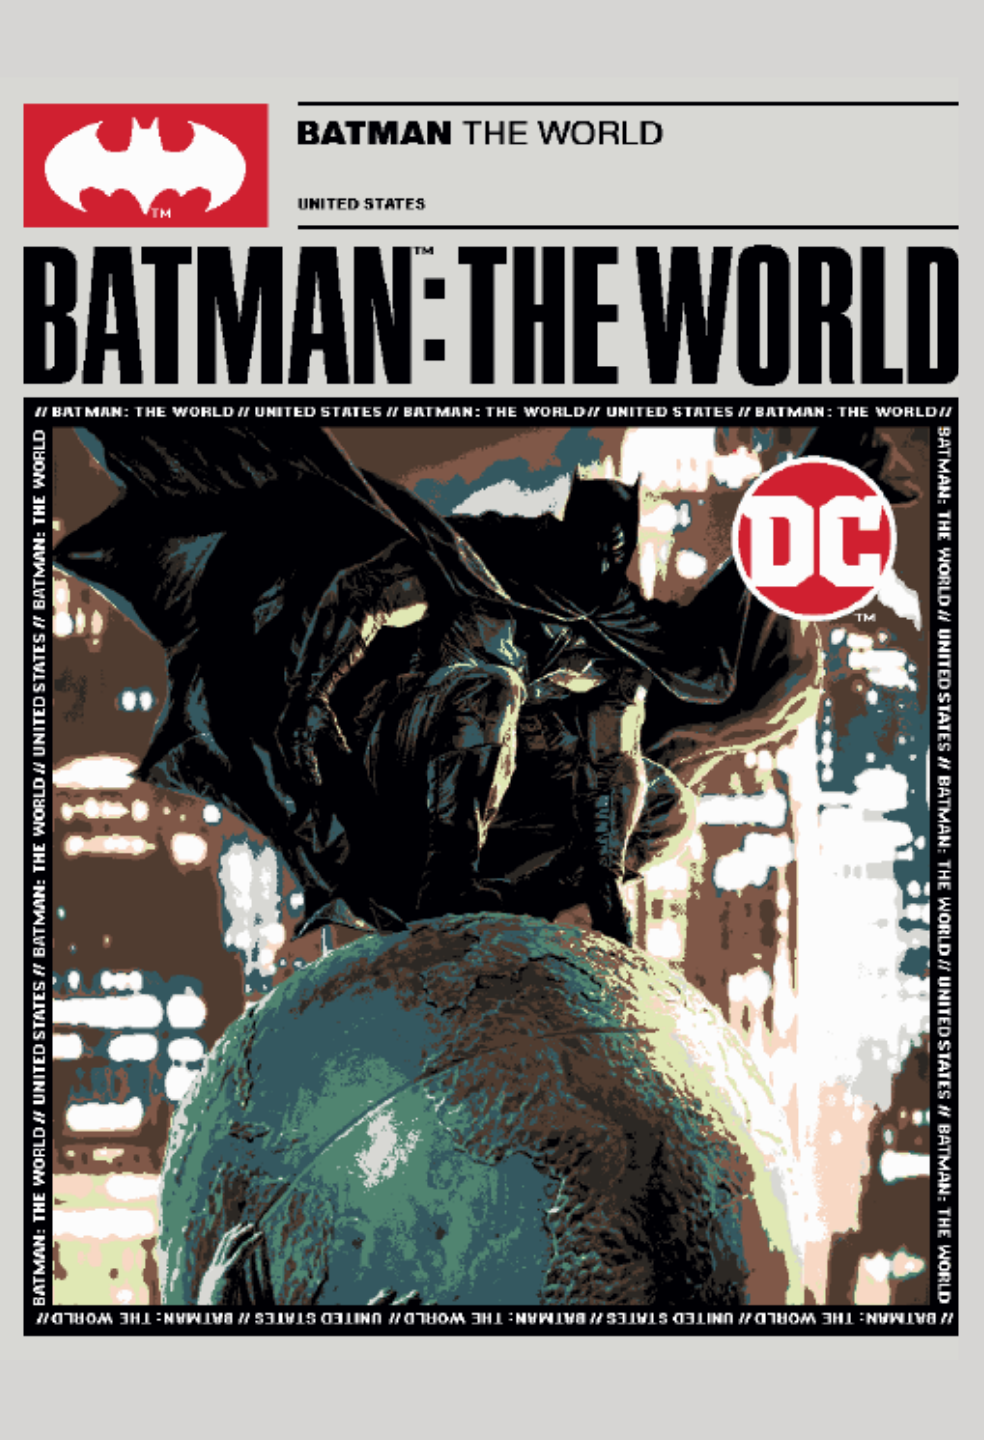 Batman: The World USA | Patch Hoodie